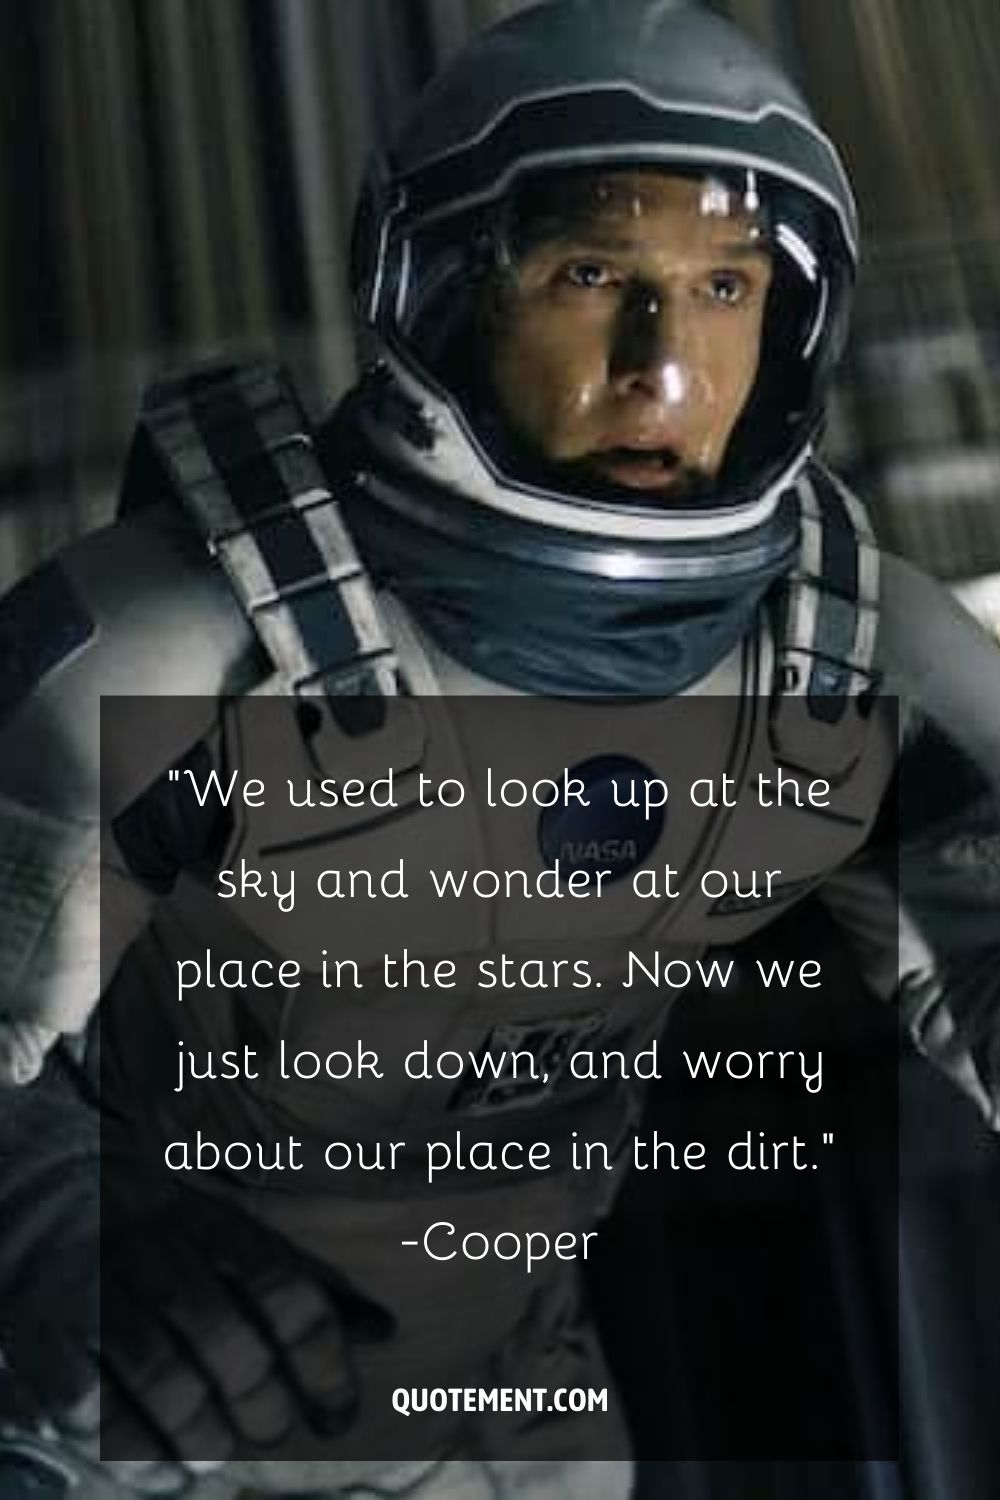 Interstellar quote to make you think.
